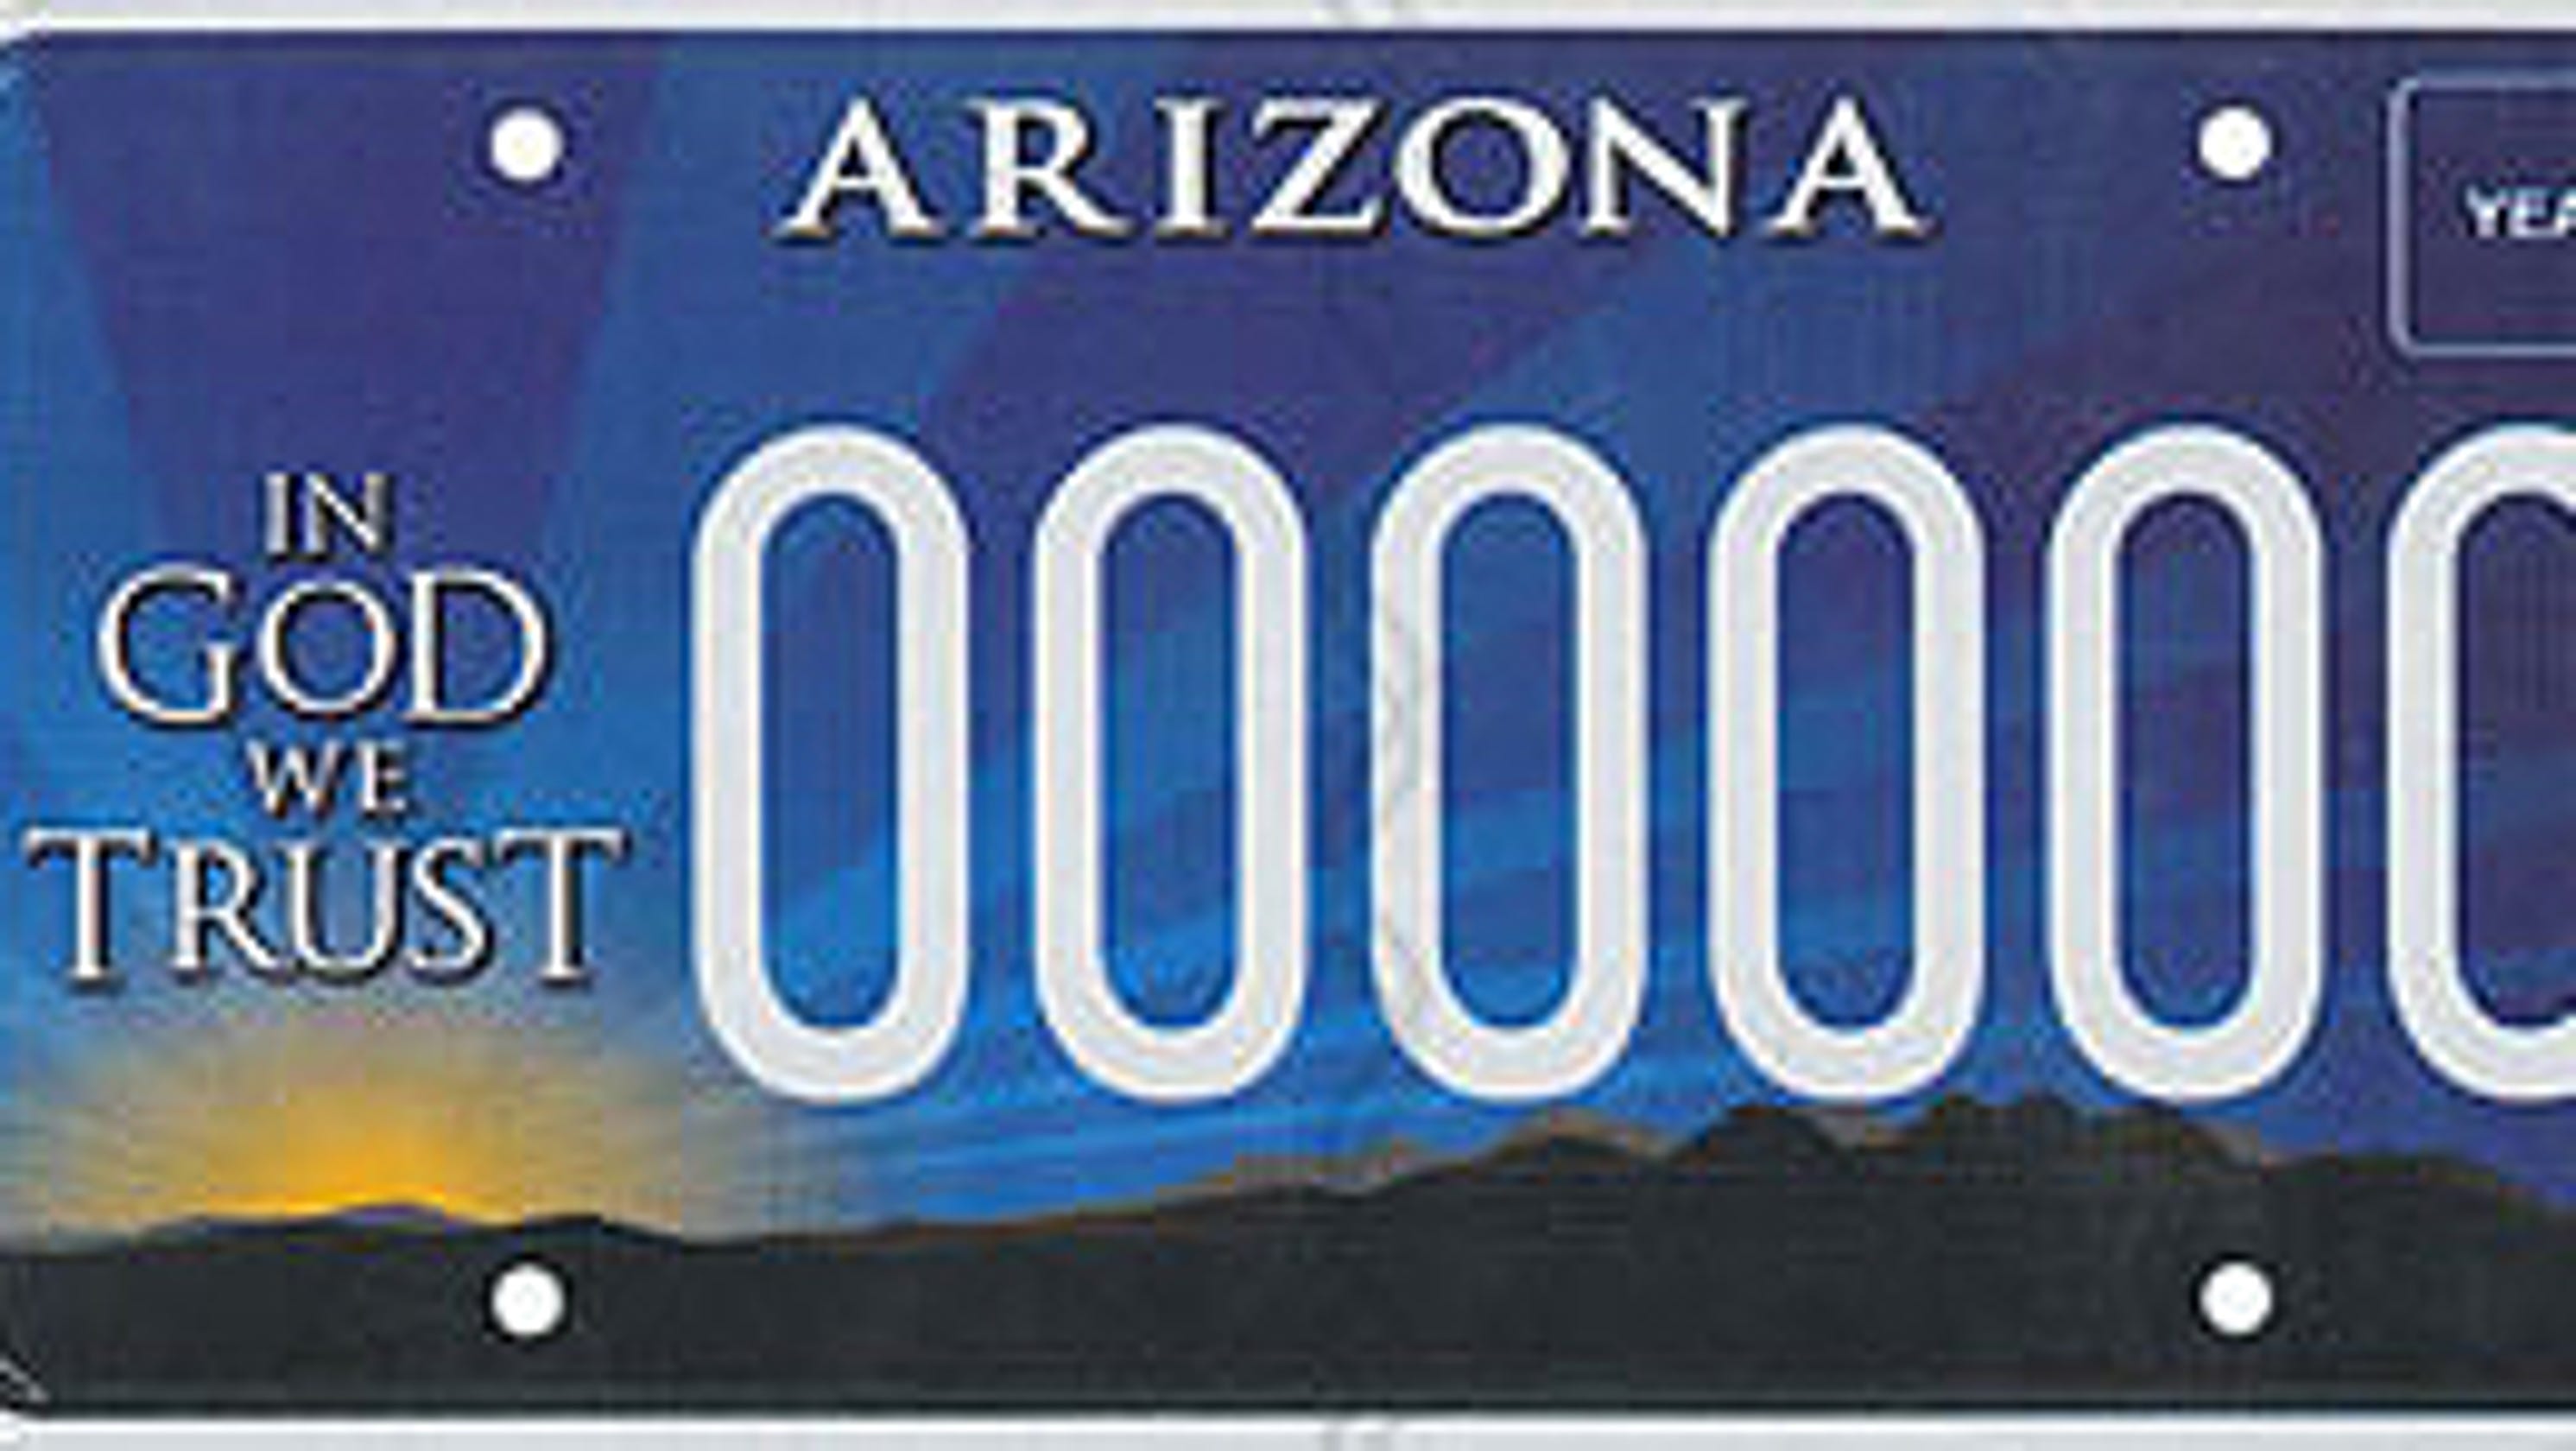 Arizona 'In God We Trust' license plate funds Alliance